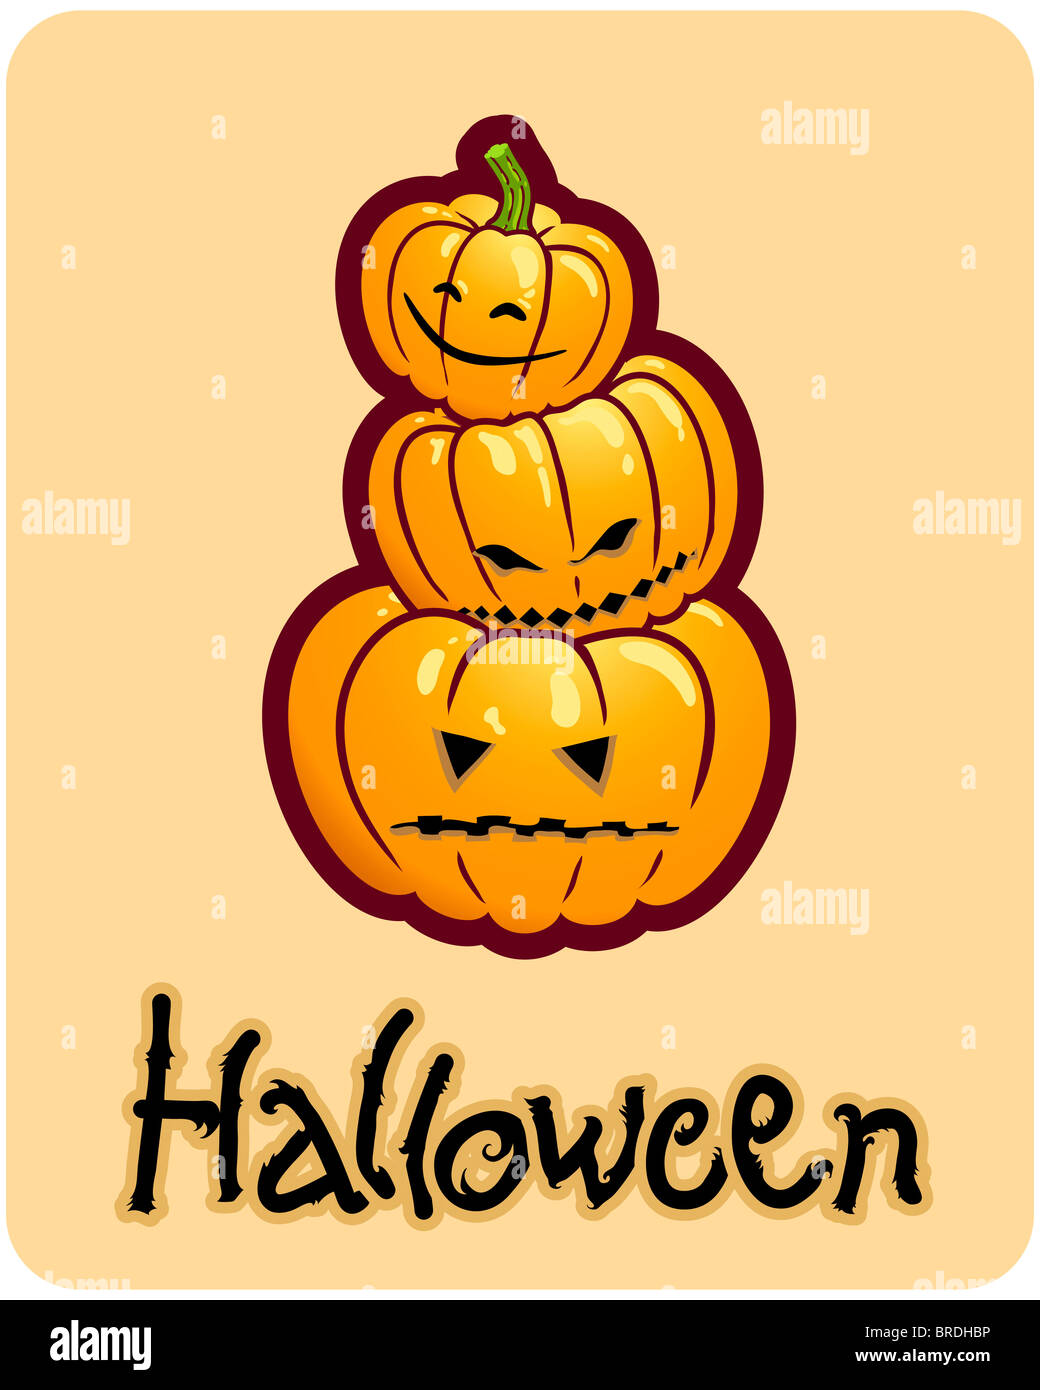 halloween's drawing - three pumpkin heads of jack-o-lantern - vector illustration Stock Photo